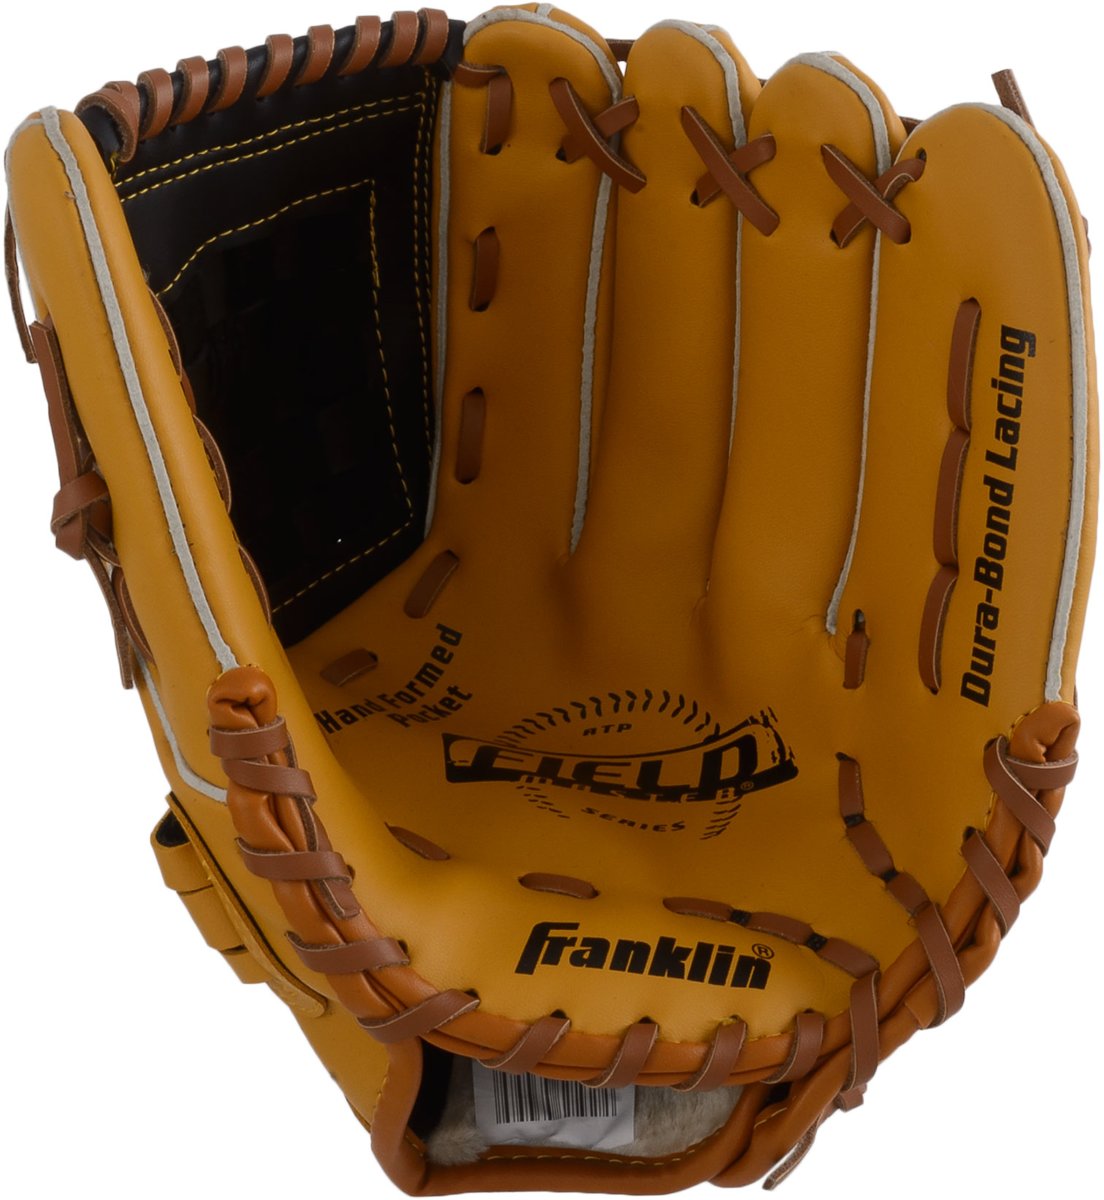 Franklin Baseball Handschoen 22603  Honkbalhandschoen - Unisex